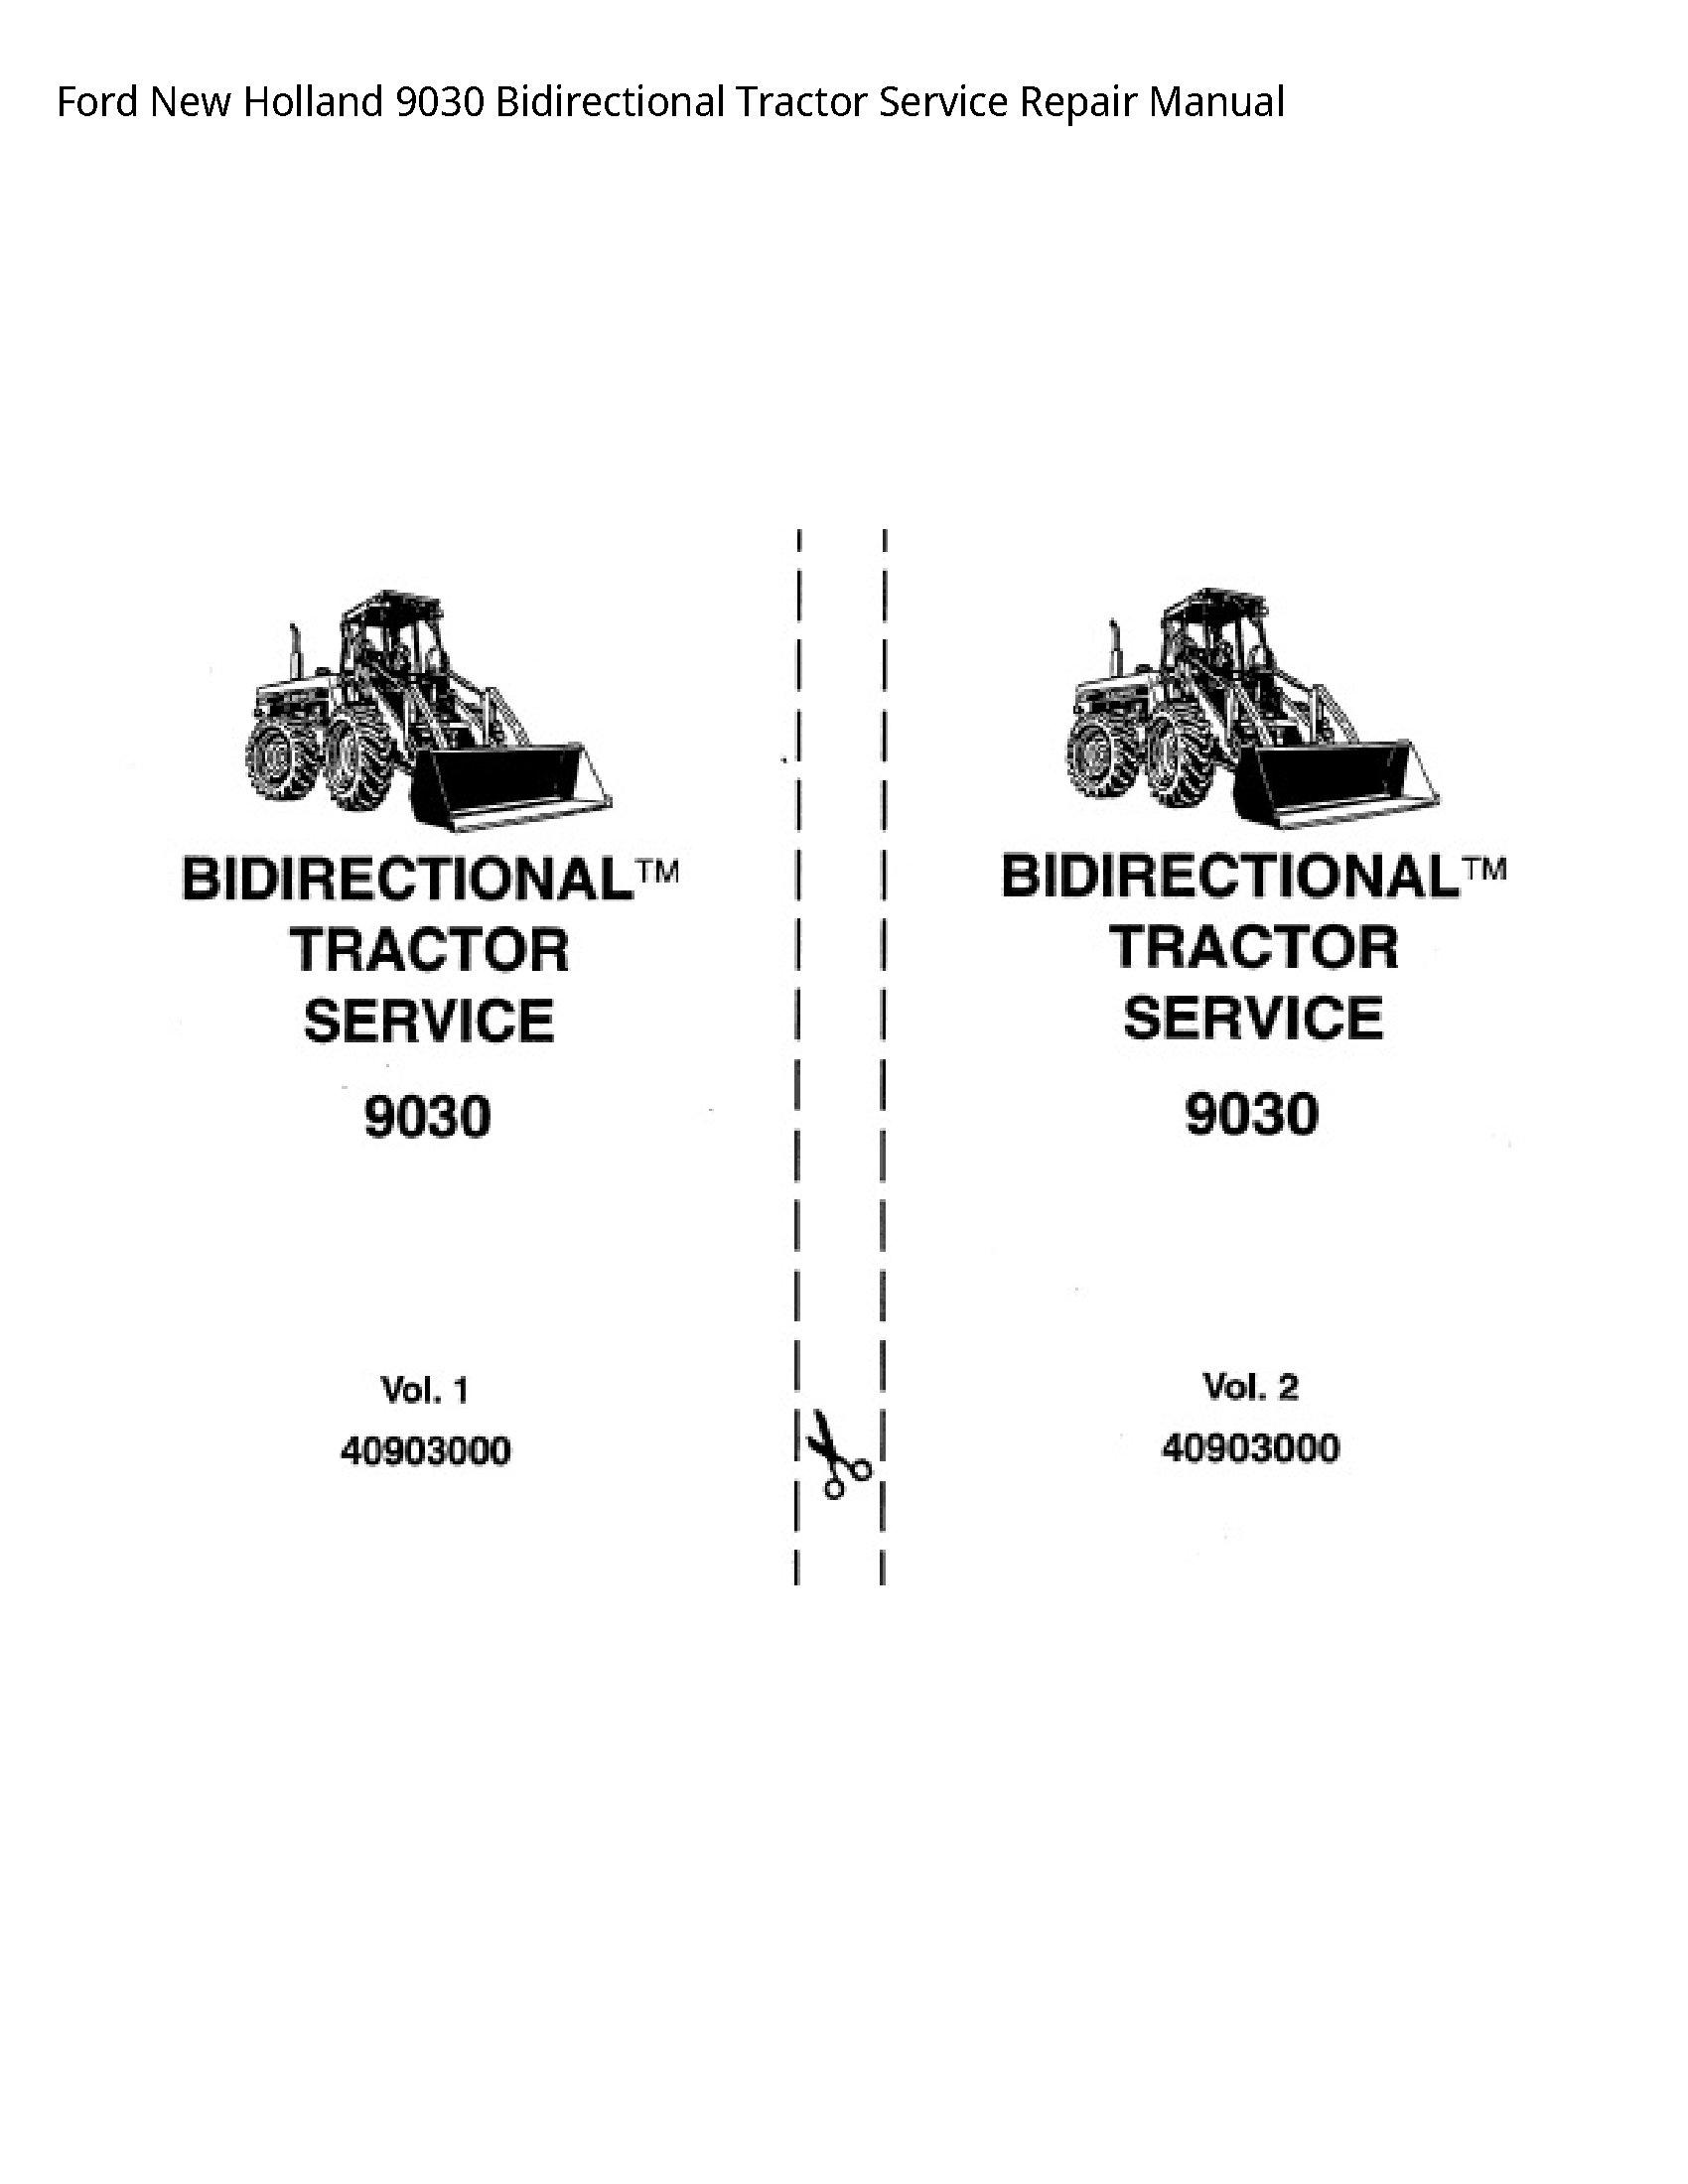  9030 Bidirectional Tractor manual